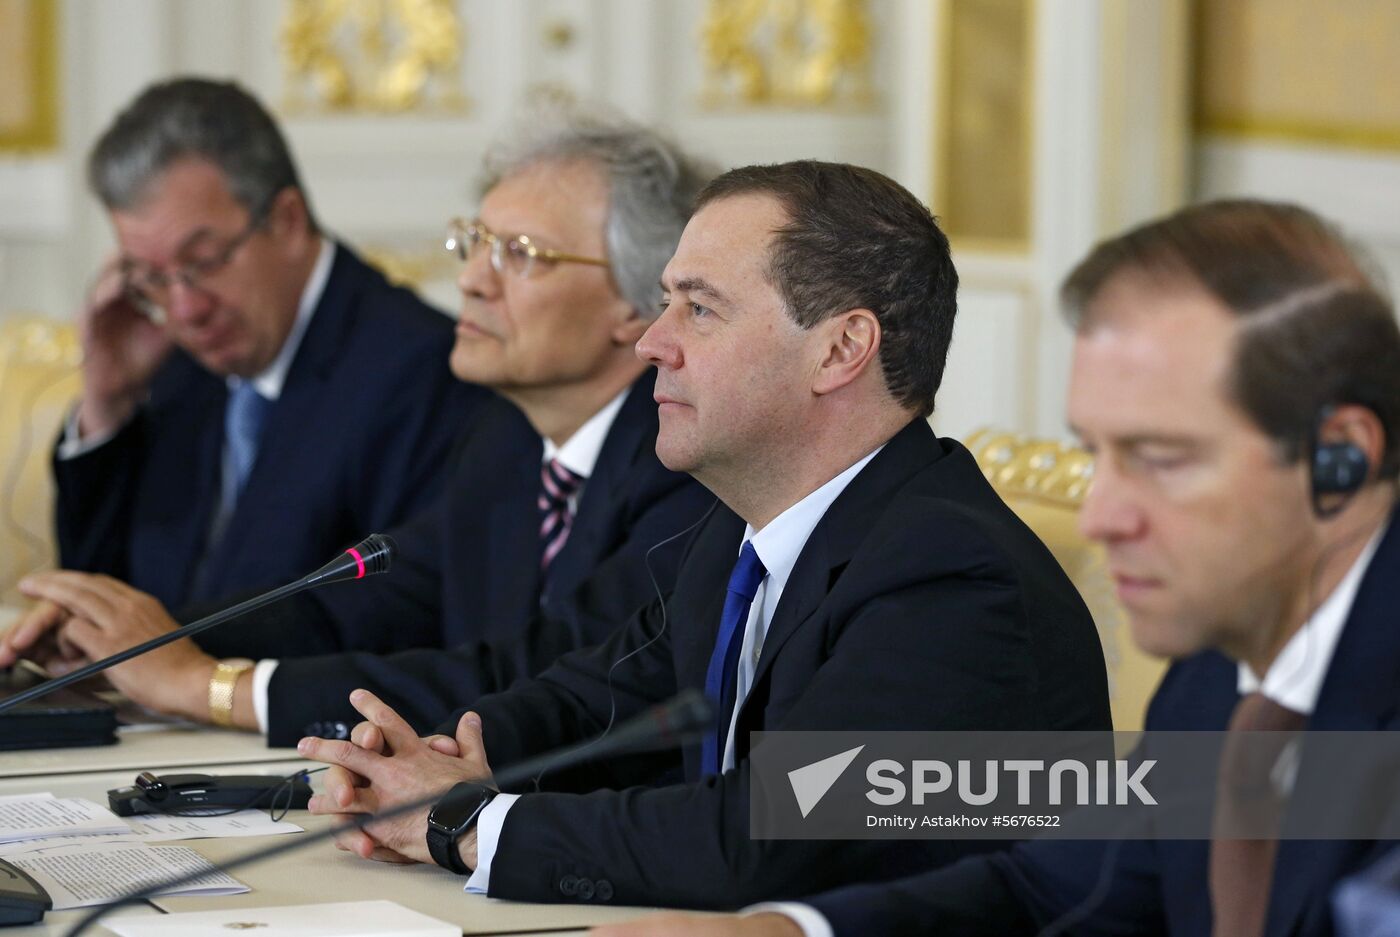 Prime Minister Dmitry Medvedev meets with Italian Prime Minister Giuseppe Conte